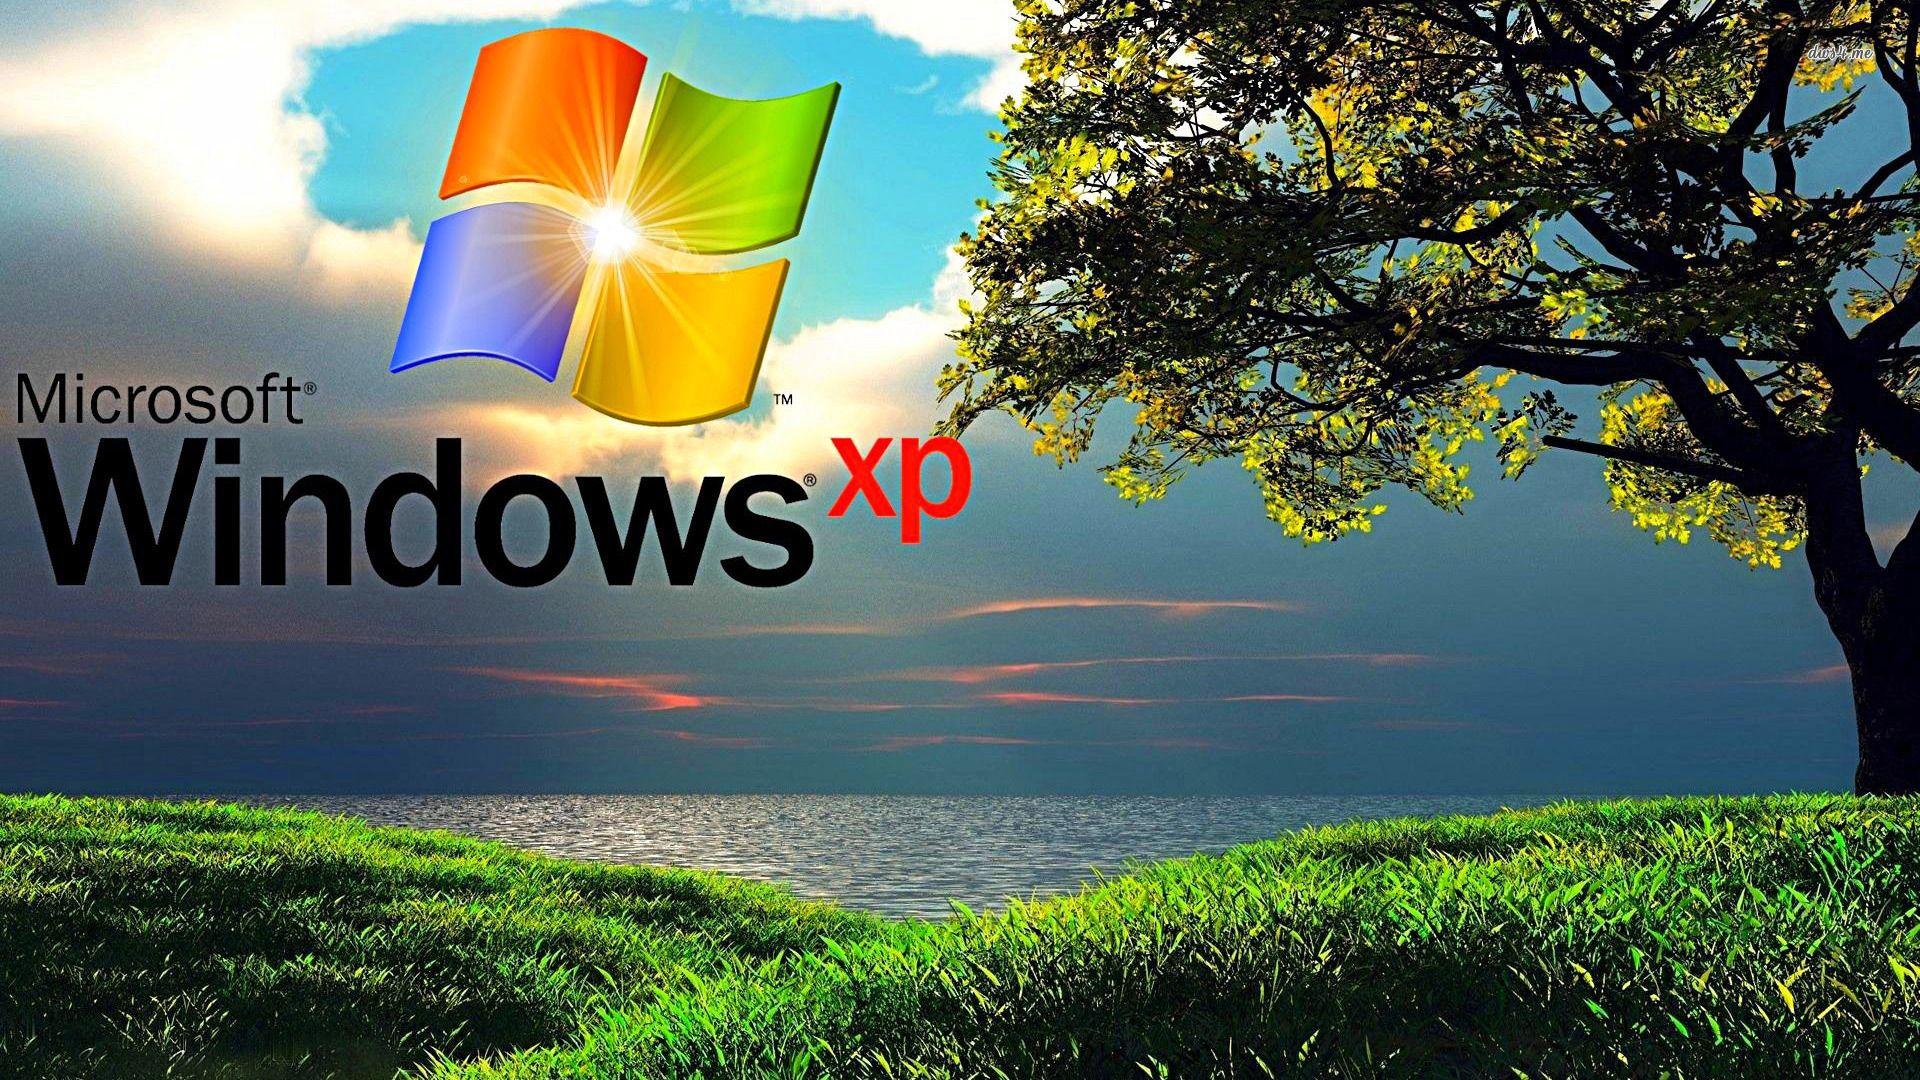 Windows XP wallpaper - Computer wallpapers -